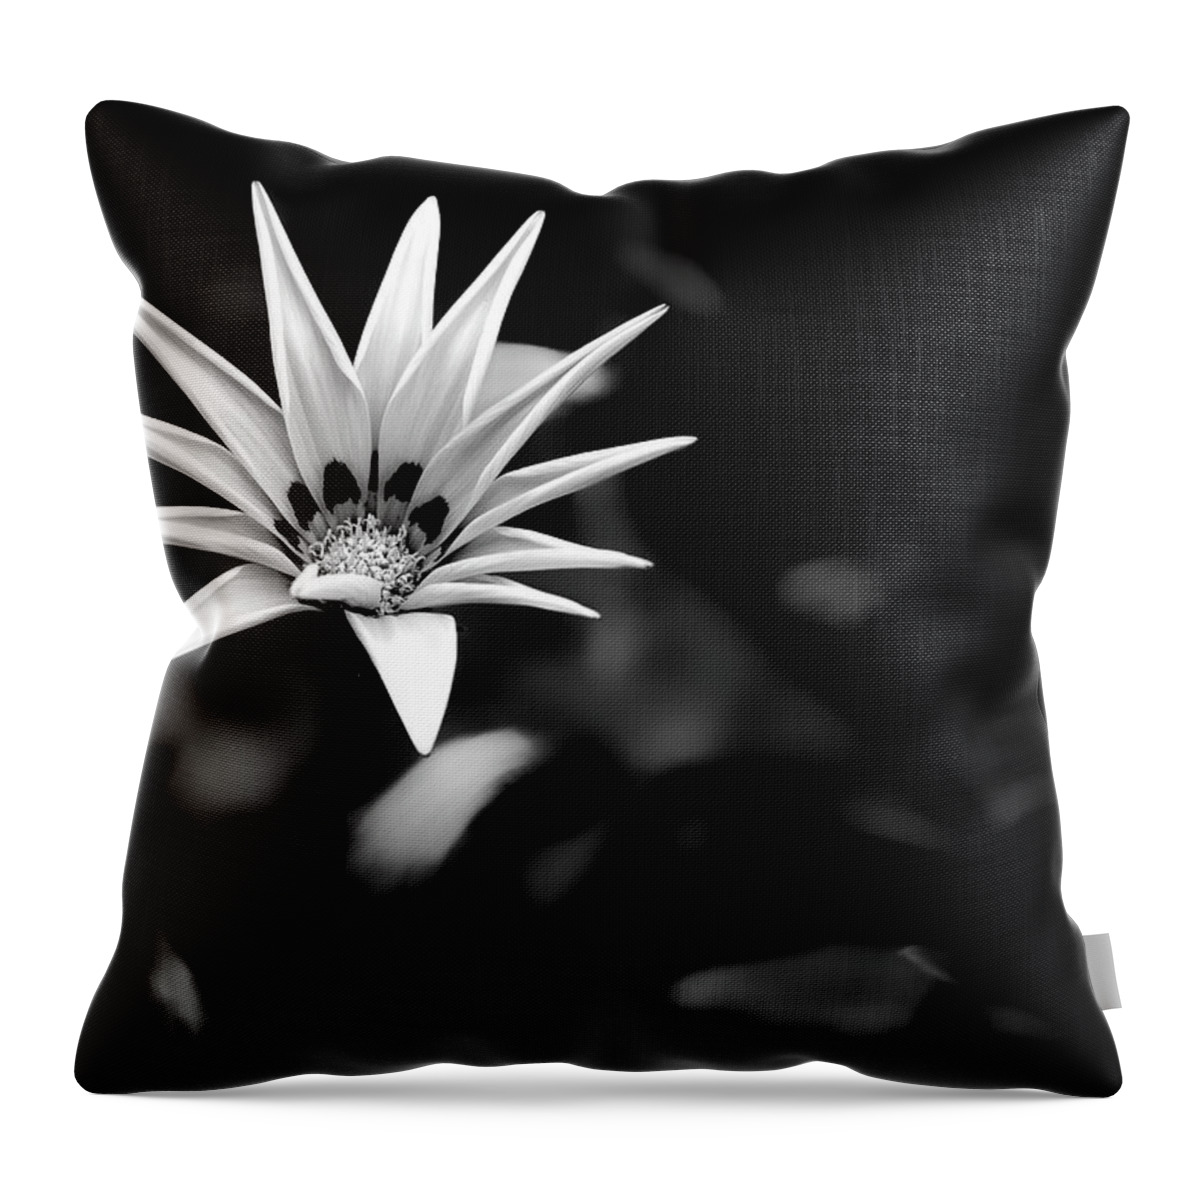 Sea Gazania Throw Pillow featuring the photograph Sea gazania in black and white by Al Fio Bonina